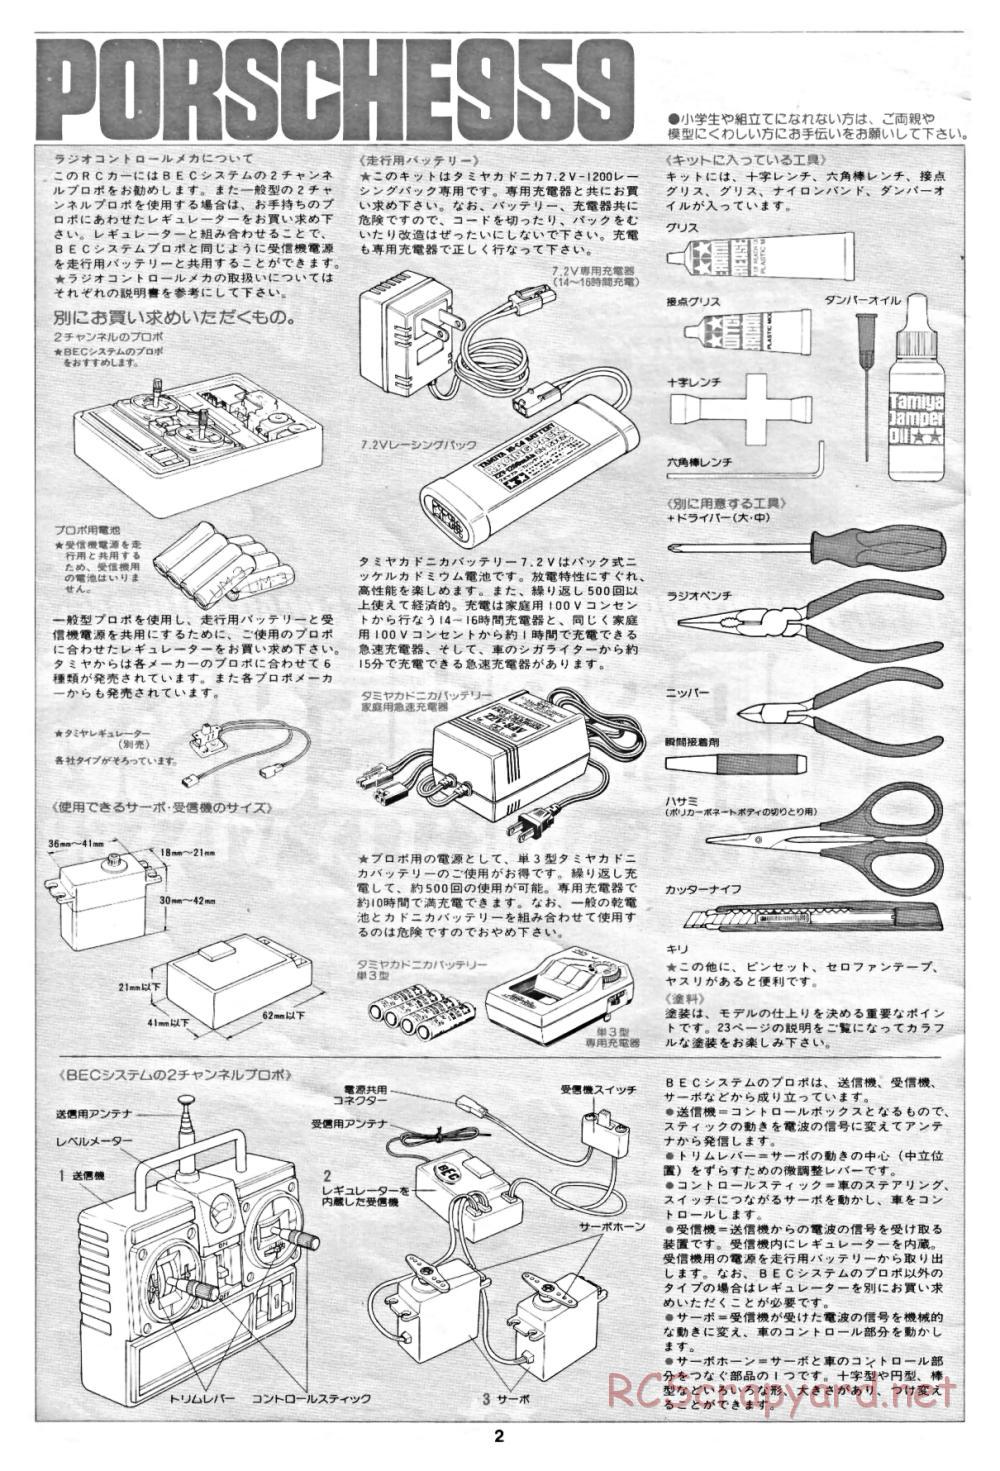 Tamiya - Porsche 959 - 58059 - Manual - Page 2